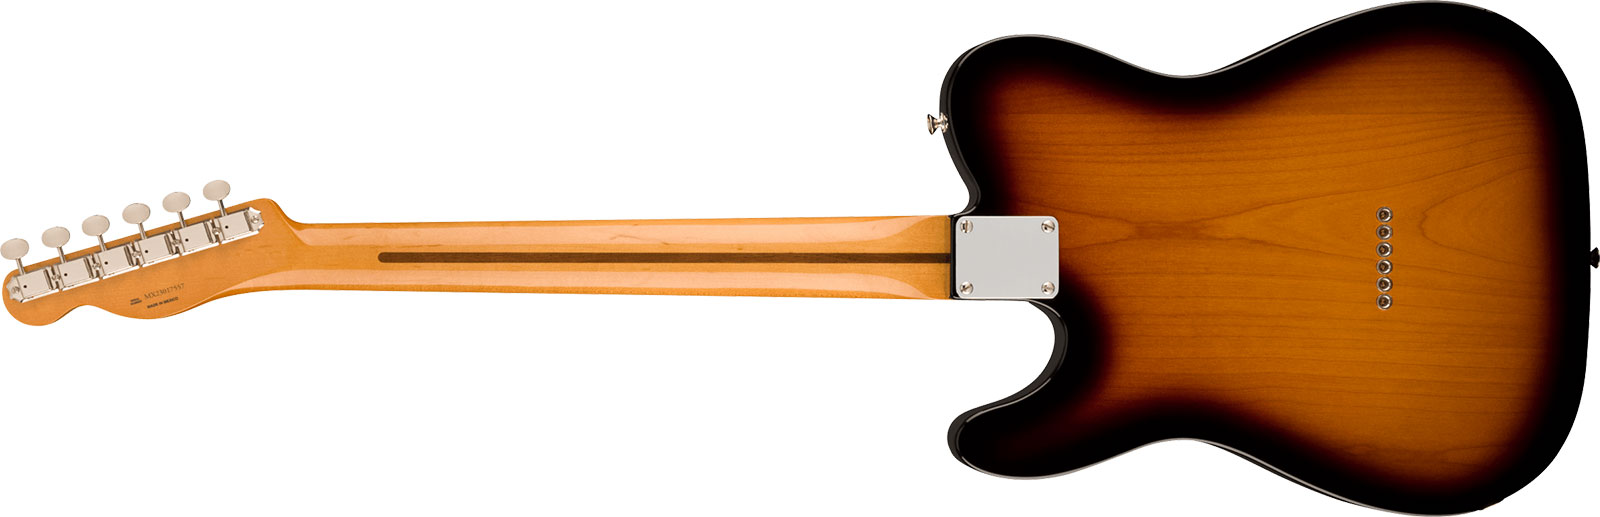 Fender Tele Nocaster 50s Vintera 2 Mex 2s Ht Mn - 2-color Sunburst - Tel shape electric guitar - Variation 1